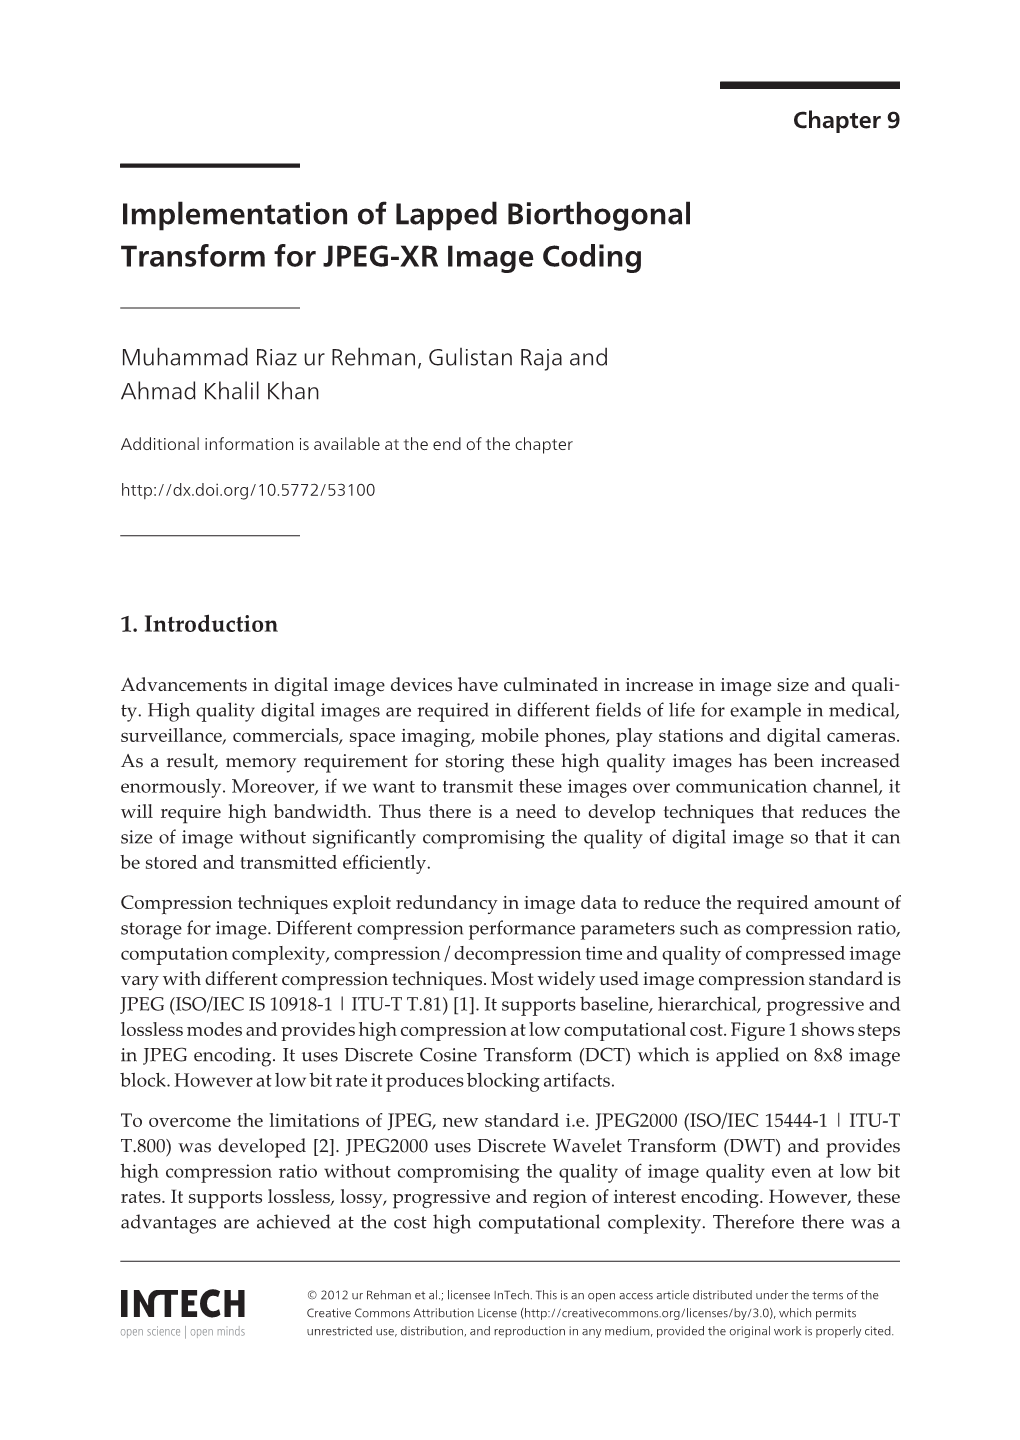 Implementation of Lapped Biorthogonal Transform for JPEG-XR Image Coding